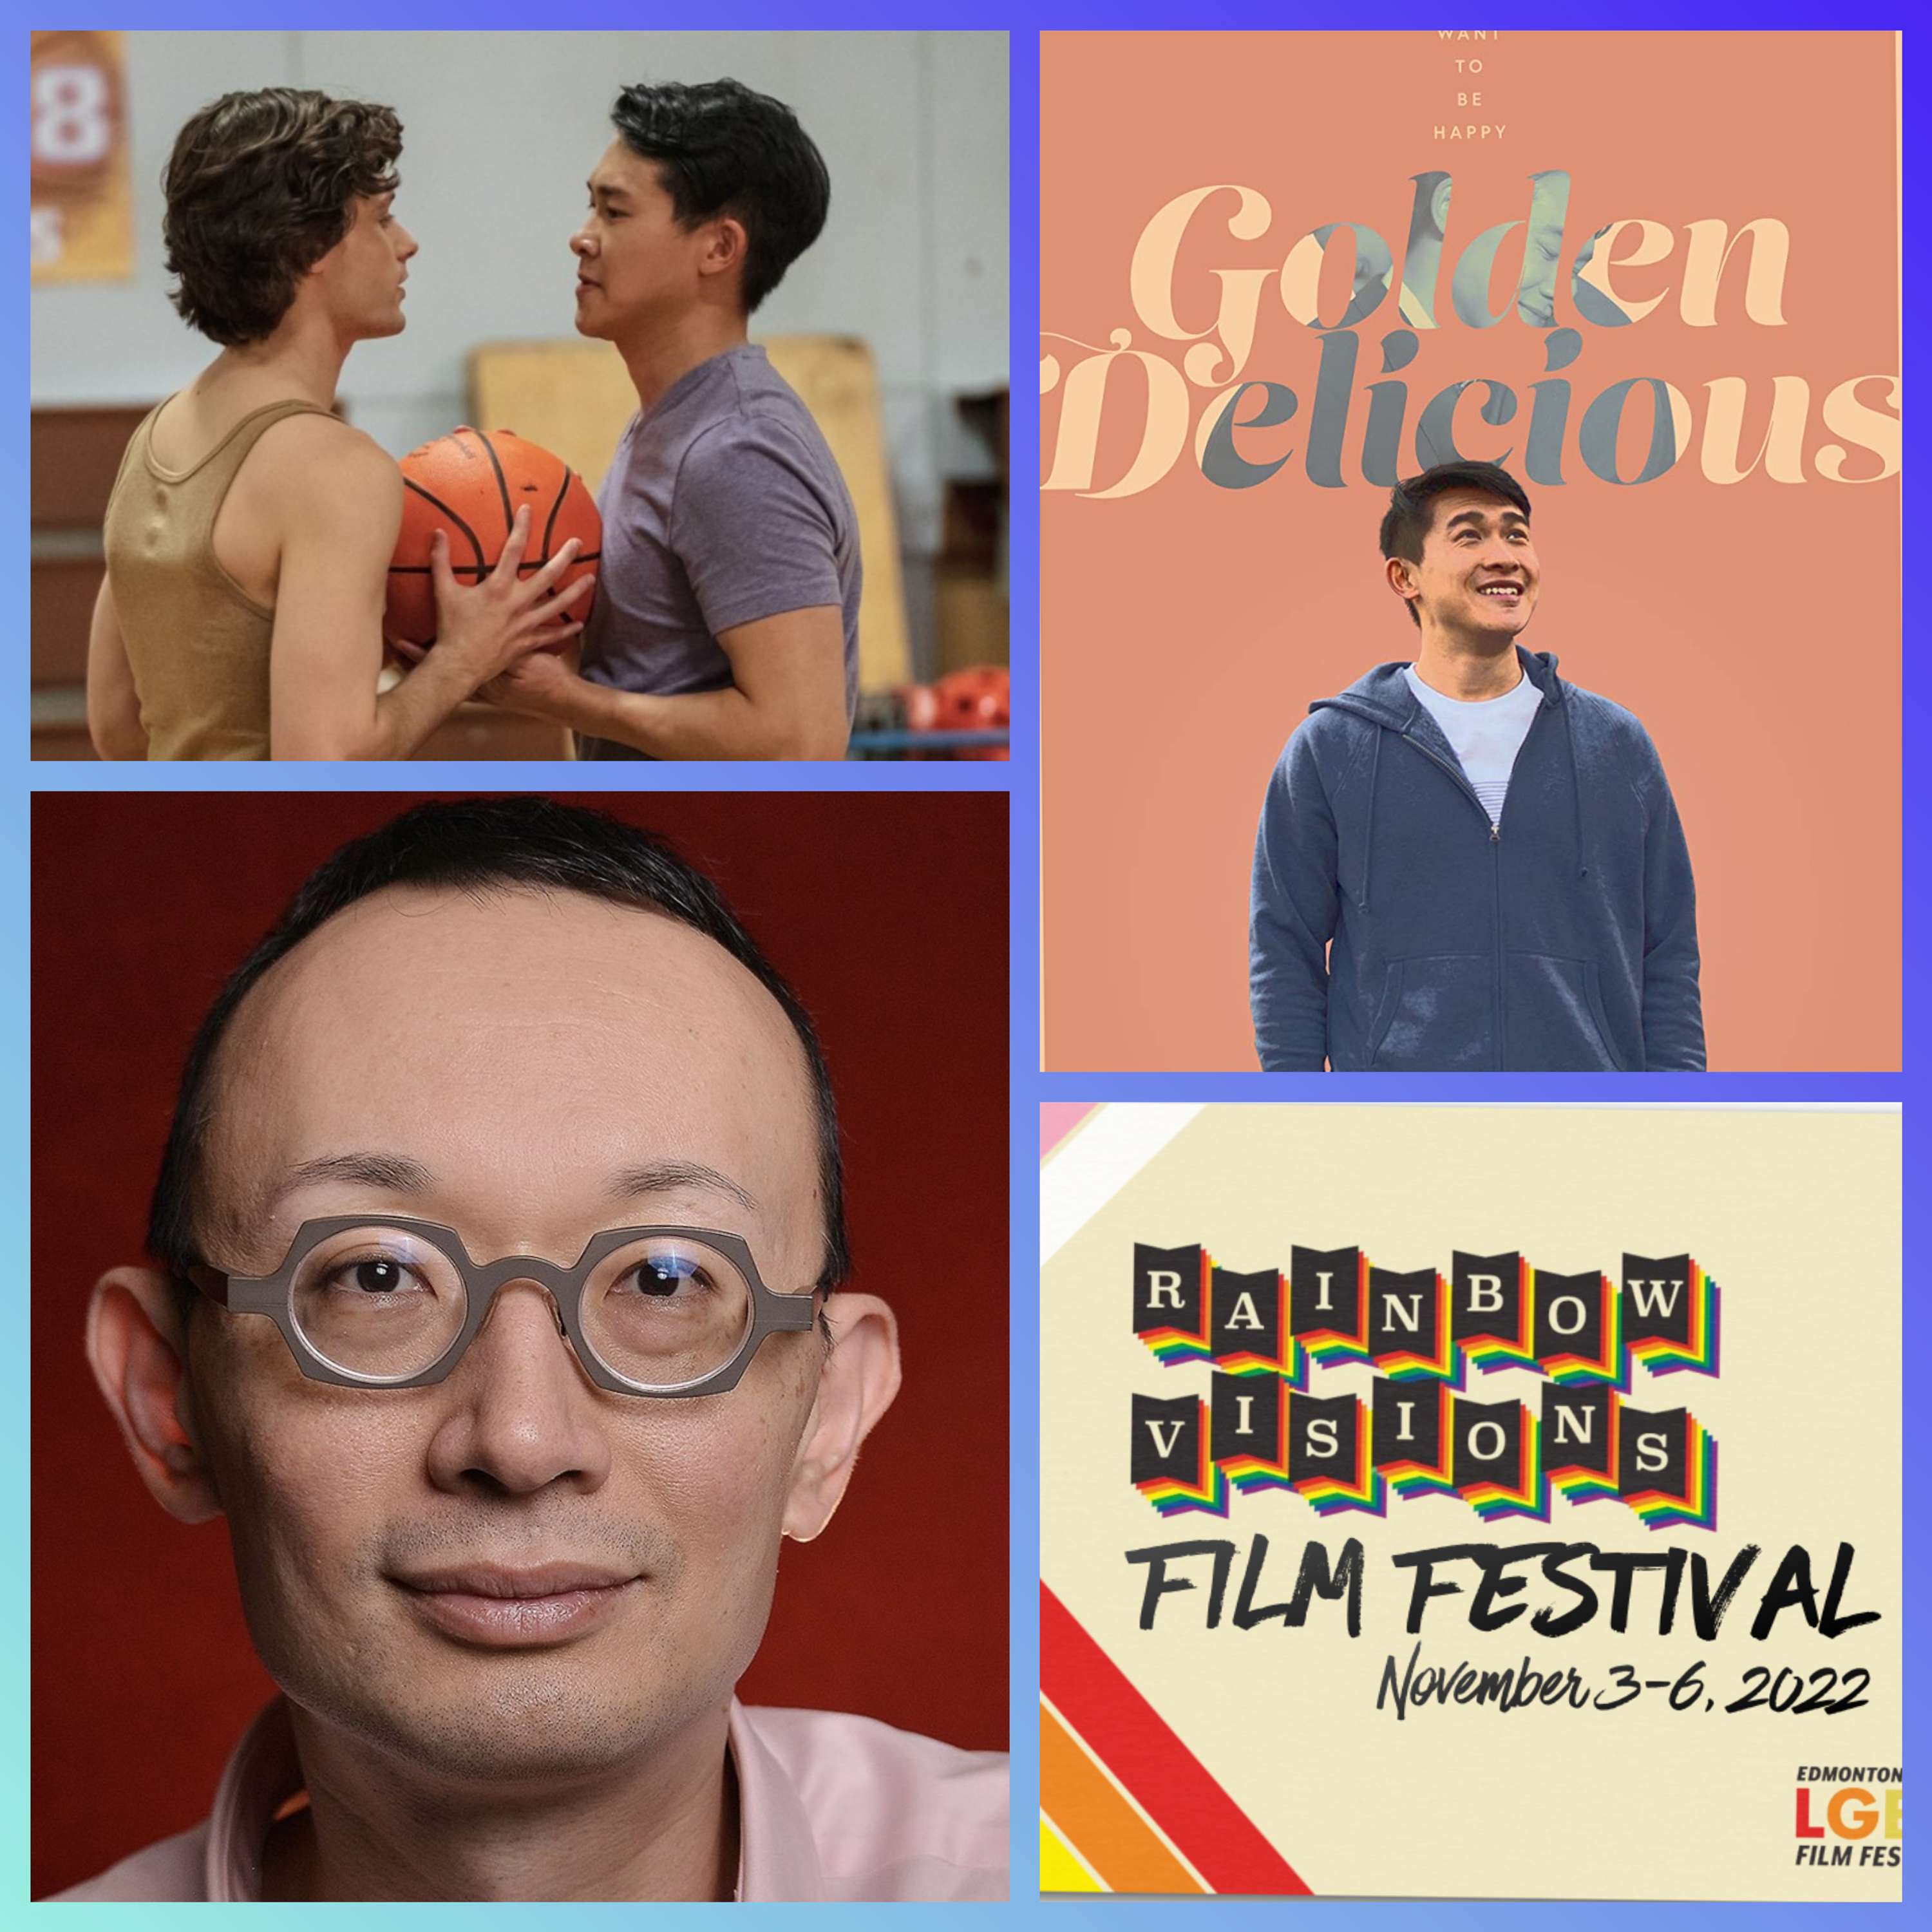 GOLDEN DELICIOUS - Jason Karman (director) Interview - Rainbow Visions Film Festival